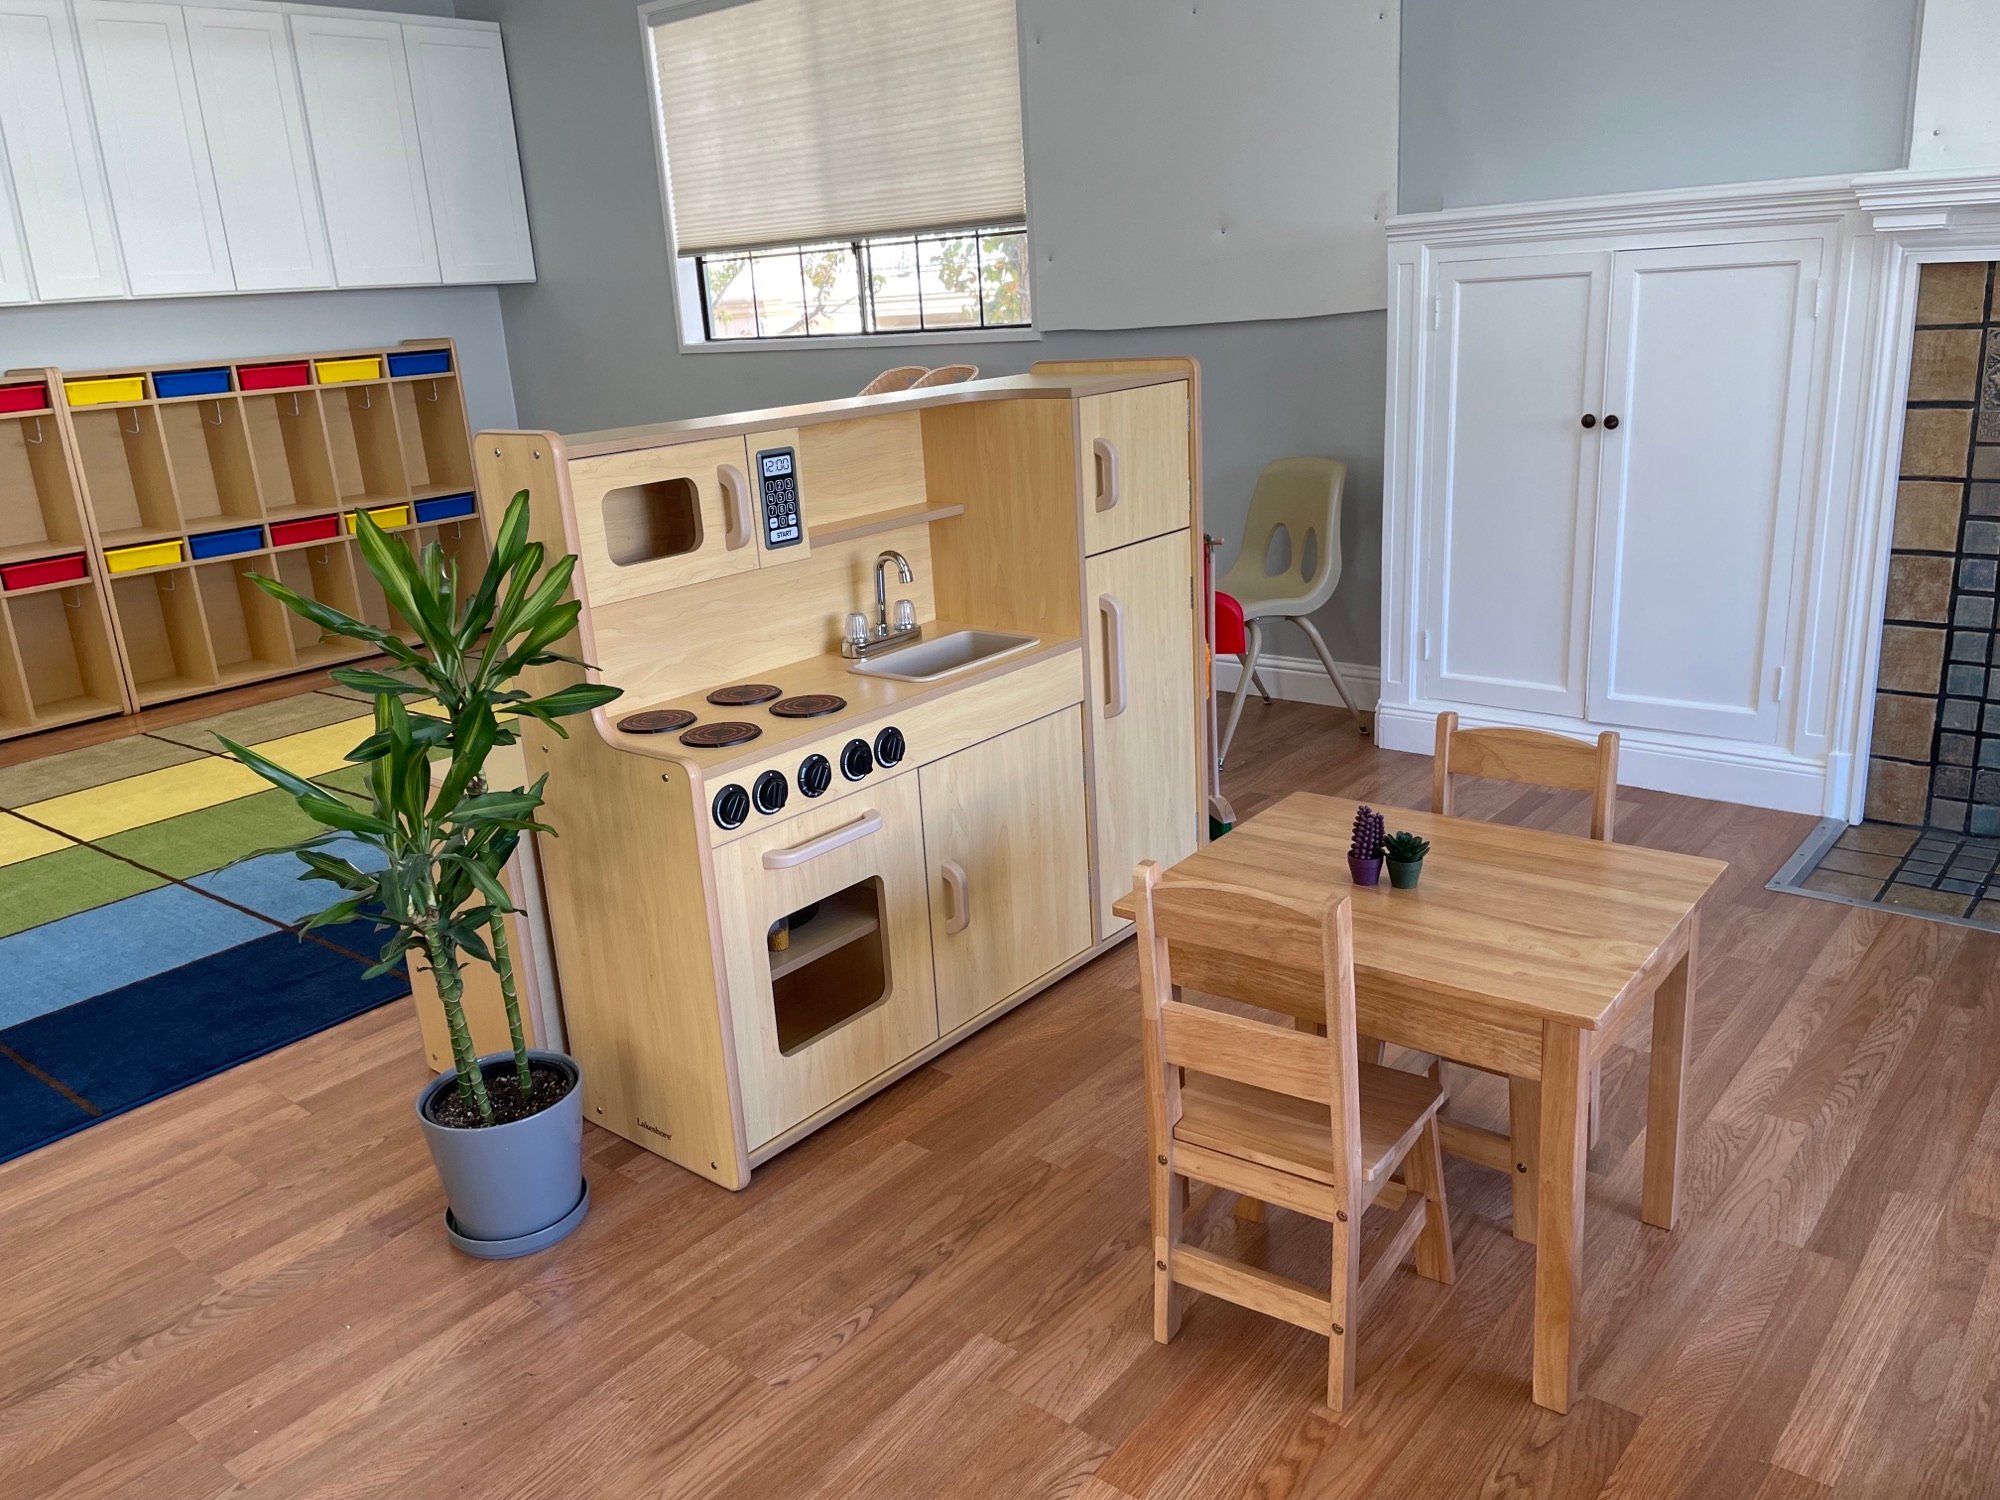 play area of a kitchen at Kids Konnect San Mateo - Downtown preschool